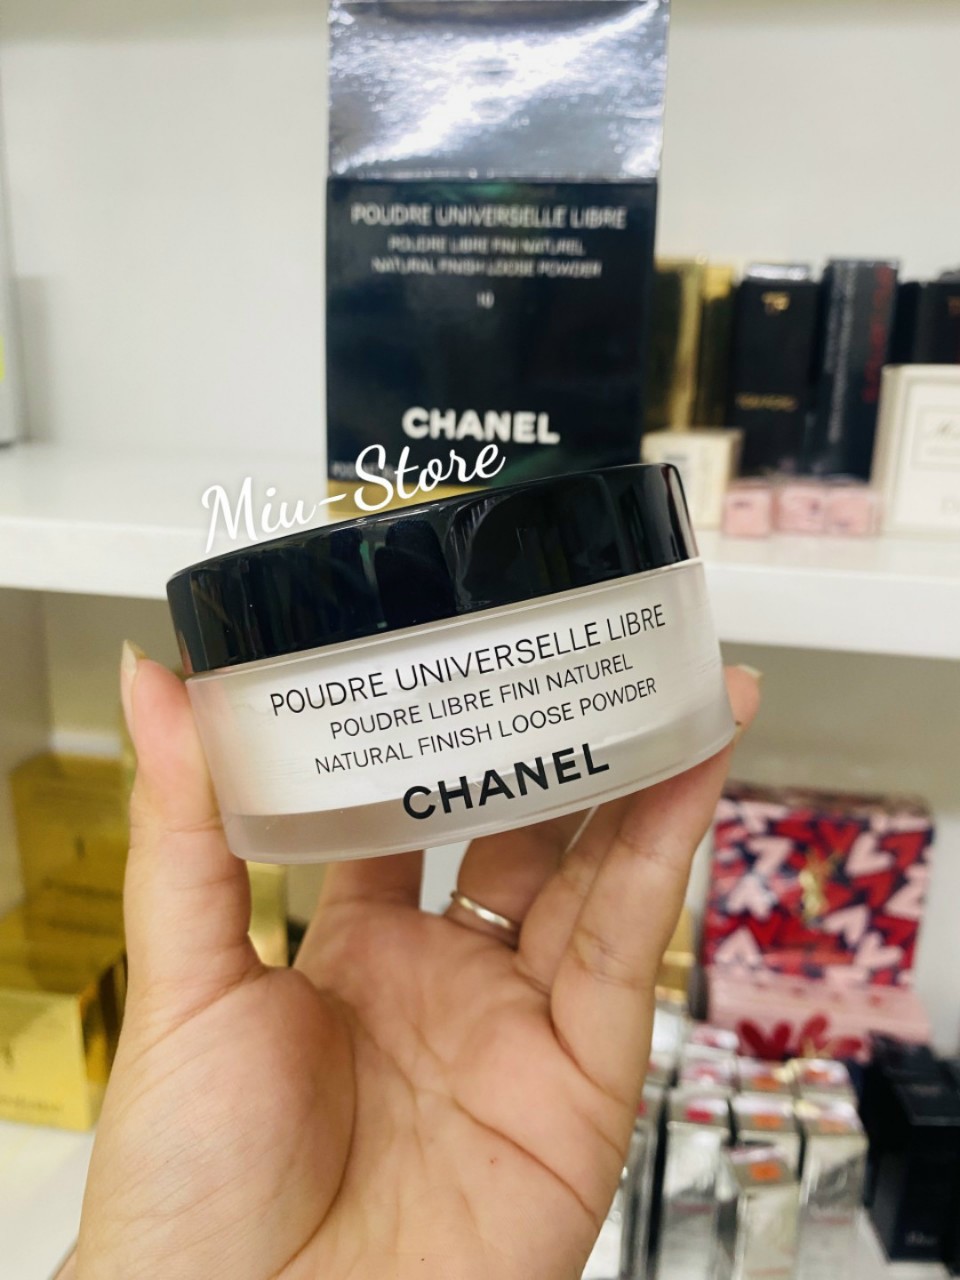 Phấn Phủ Dạng Bột Chanel Poudre Universelle Libre  Tone 20 Tự Nhiên 30g   MixASale